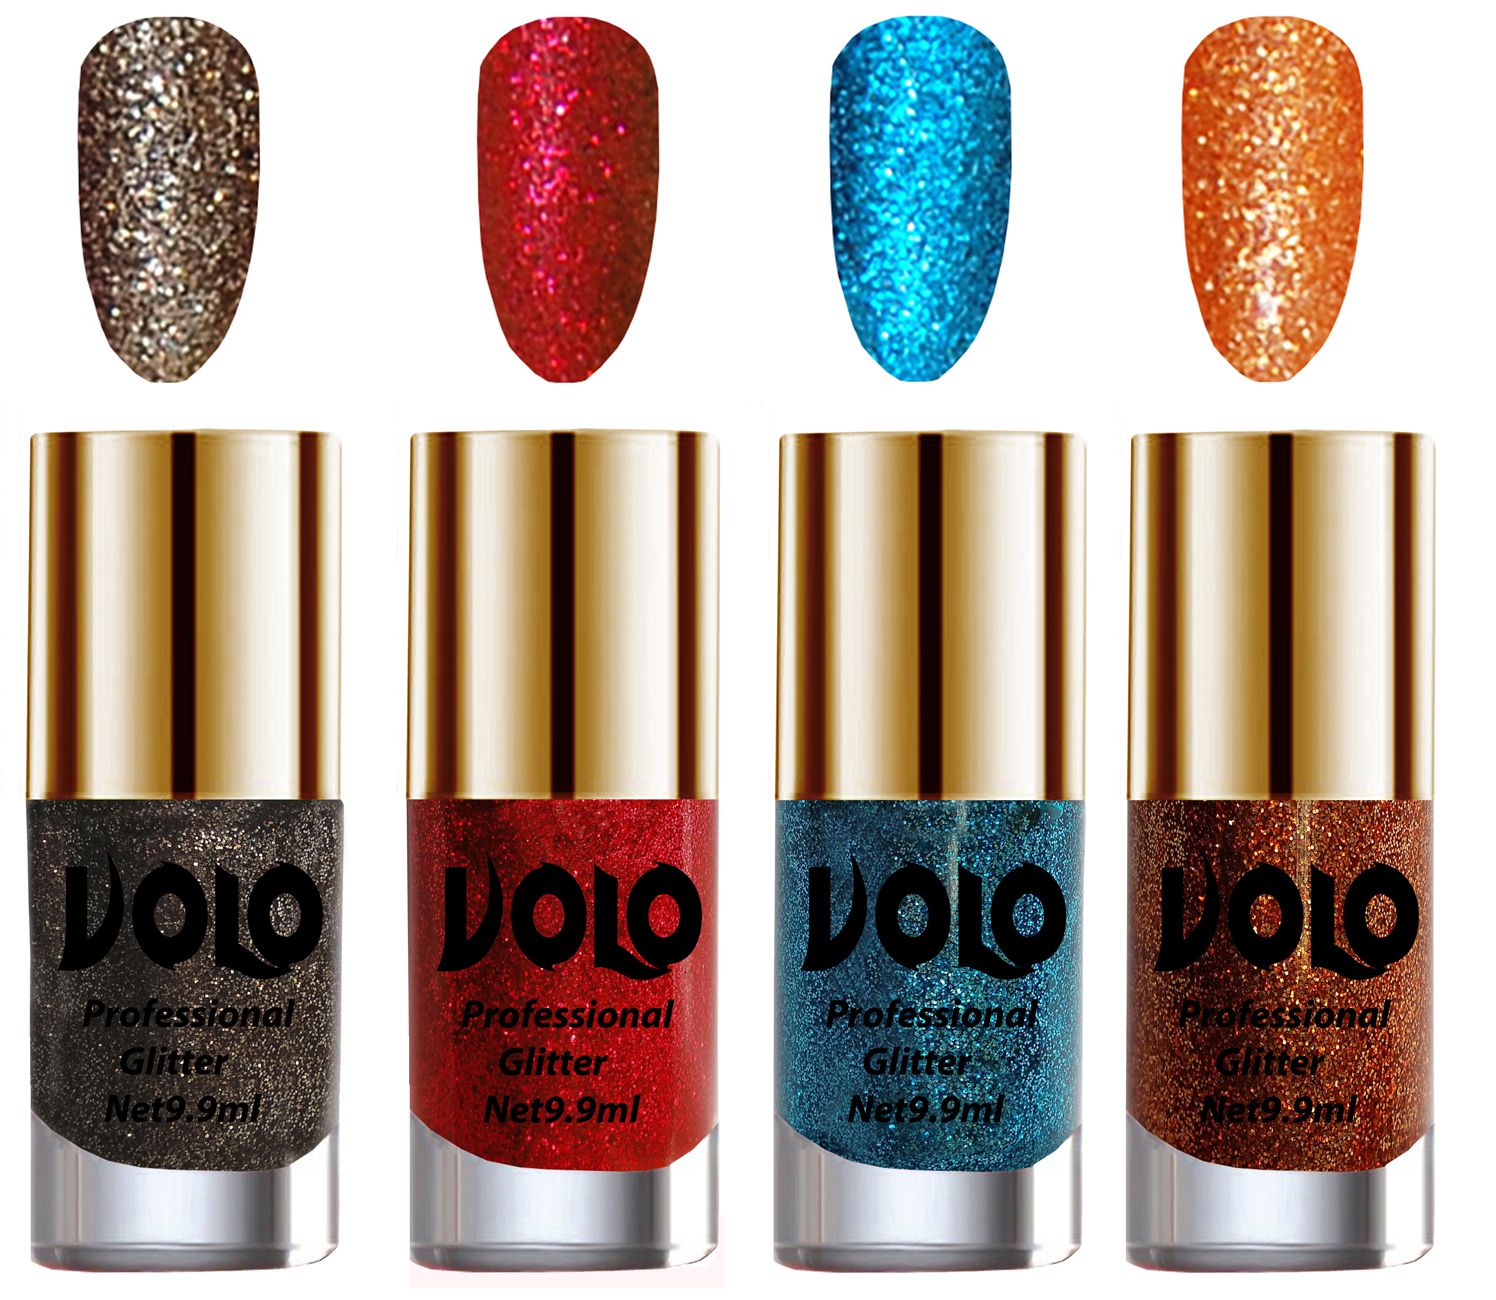     			VOLO Professionally Used Glitter Shine Nail Polish Grey,Red,Blue Orange Pack of 4 39 mL